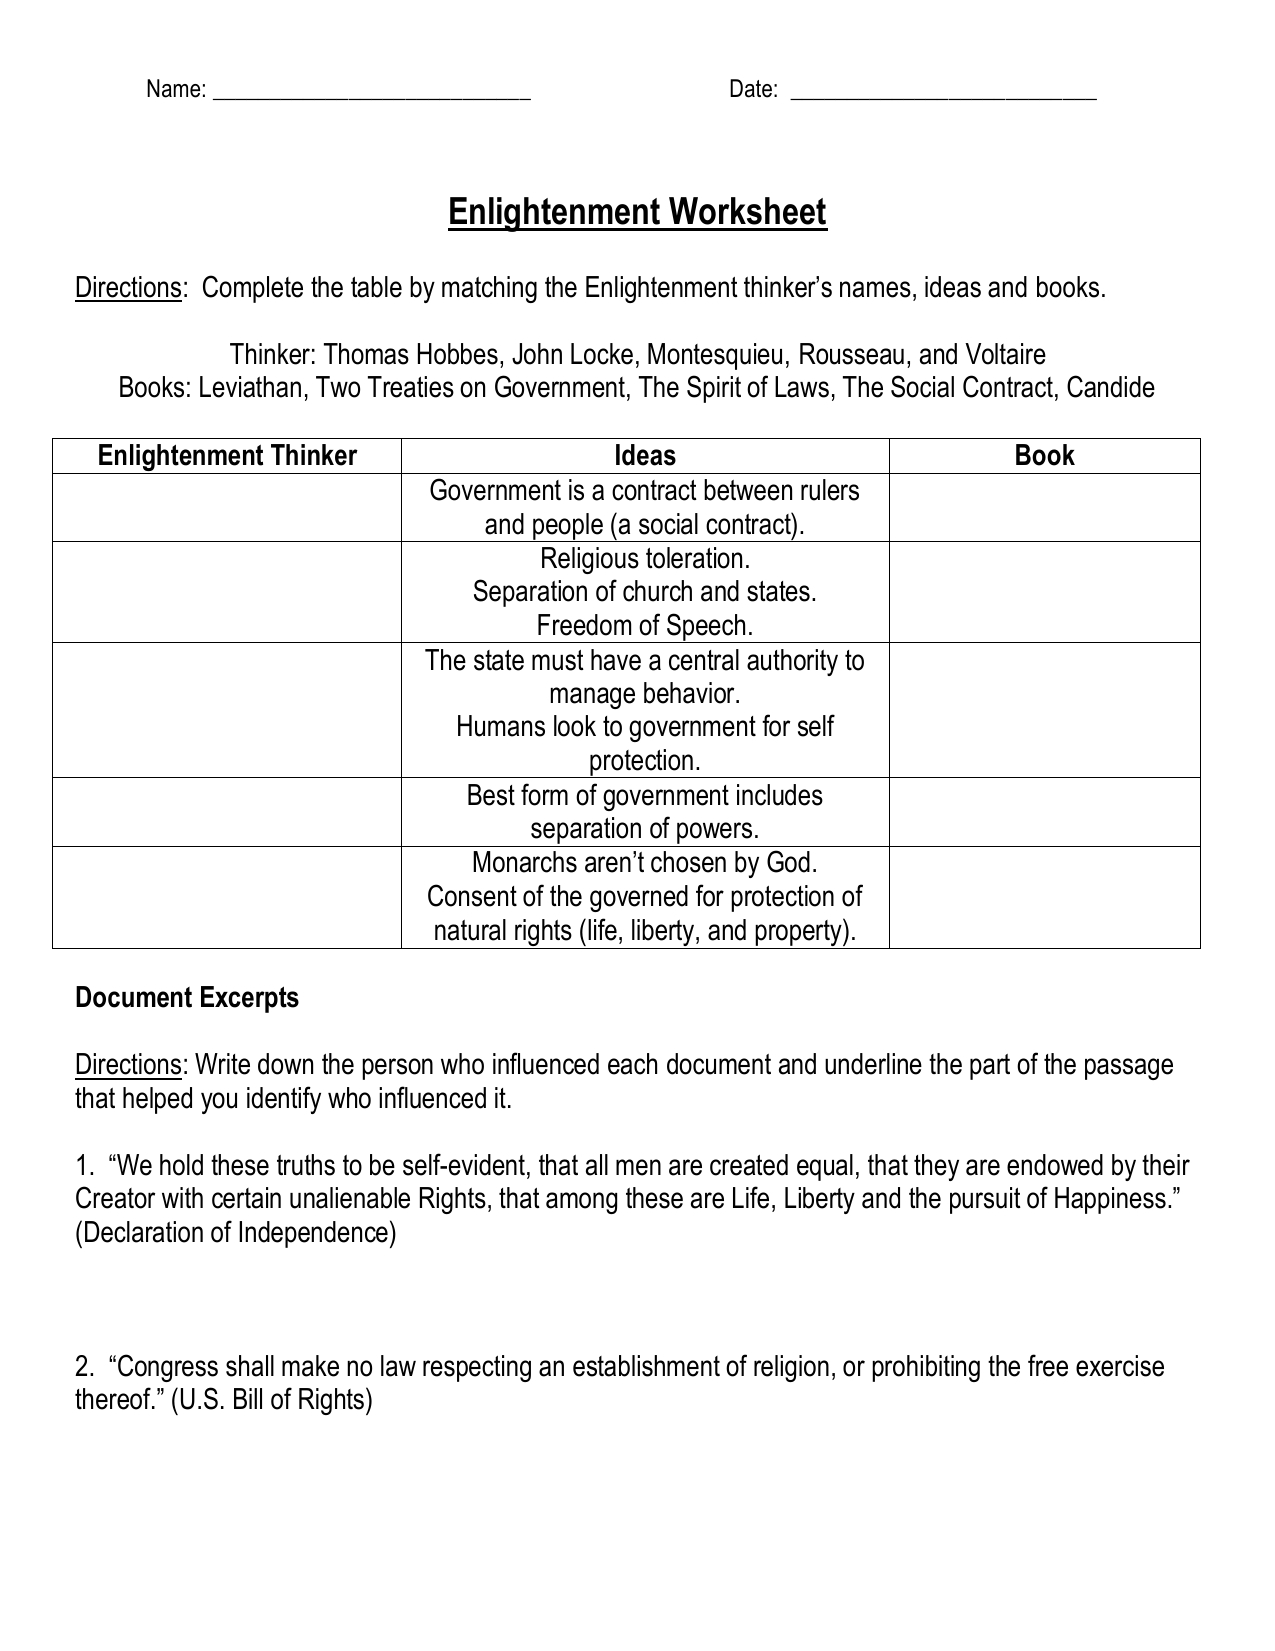 Enlightenment Worksheet Db excel